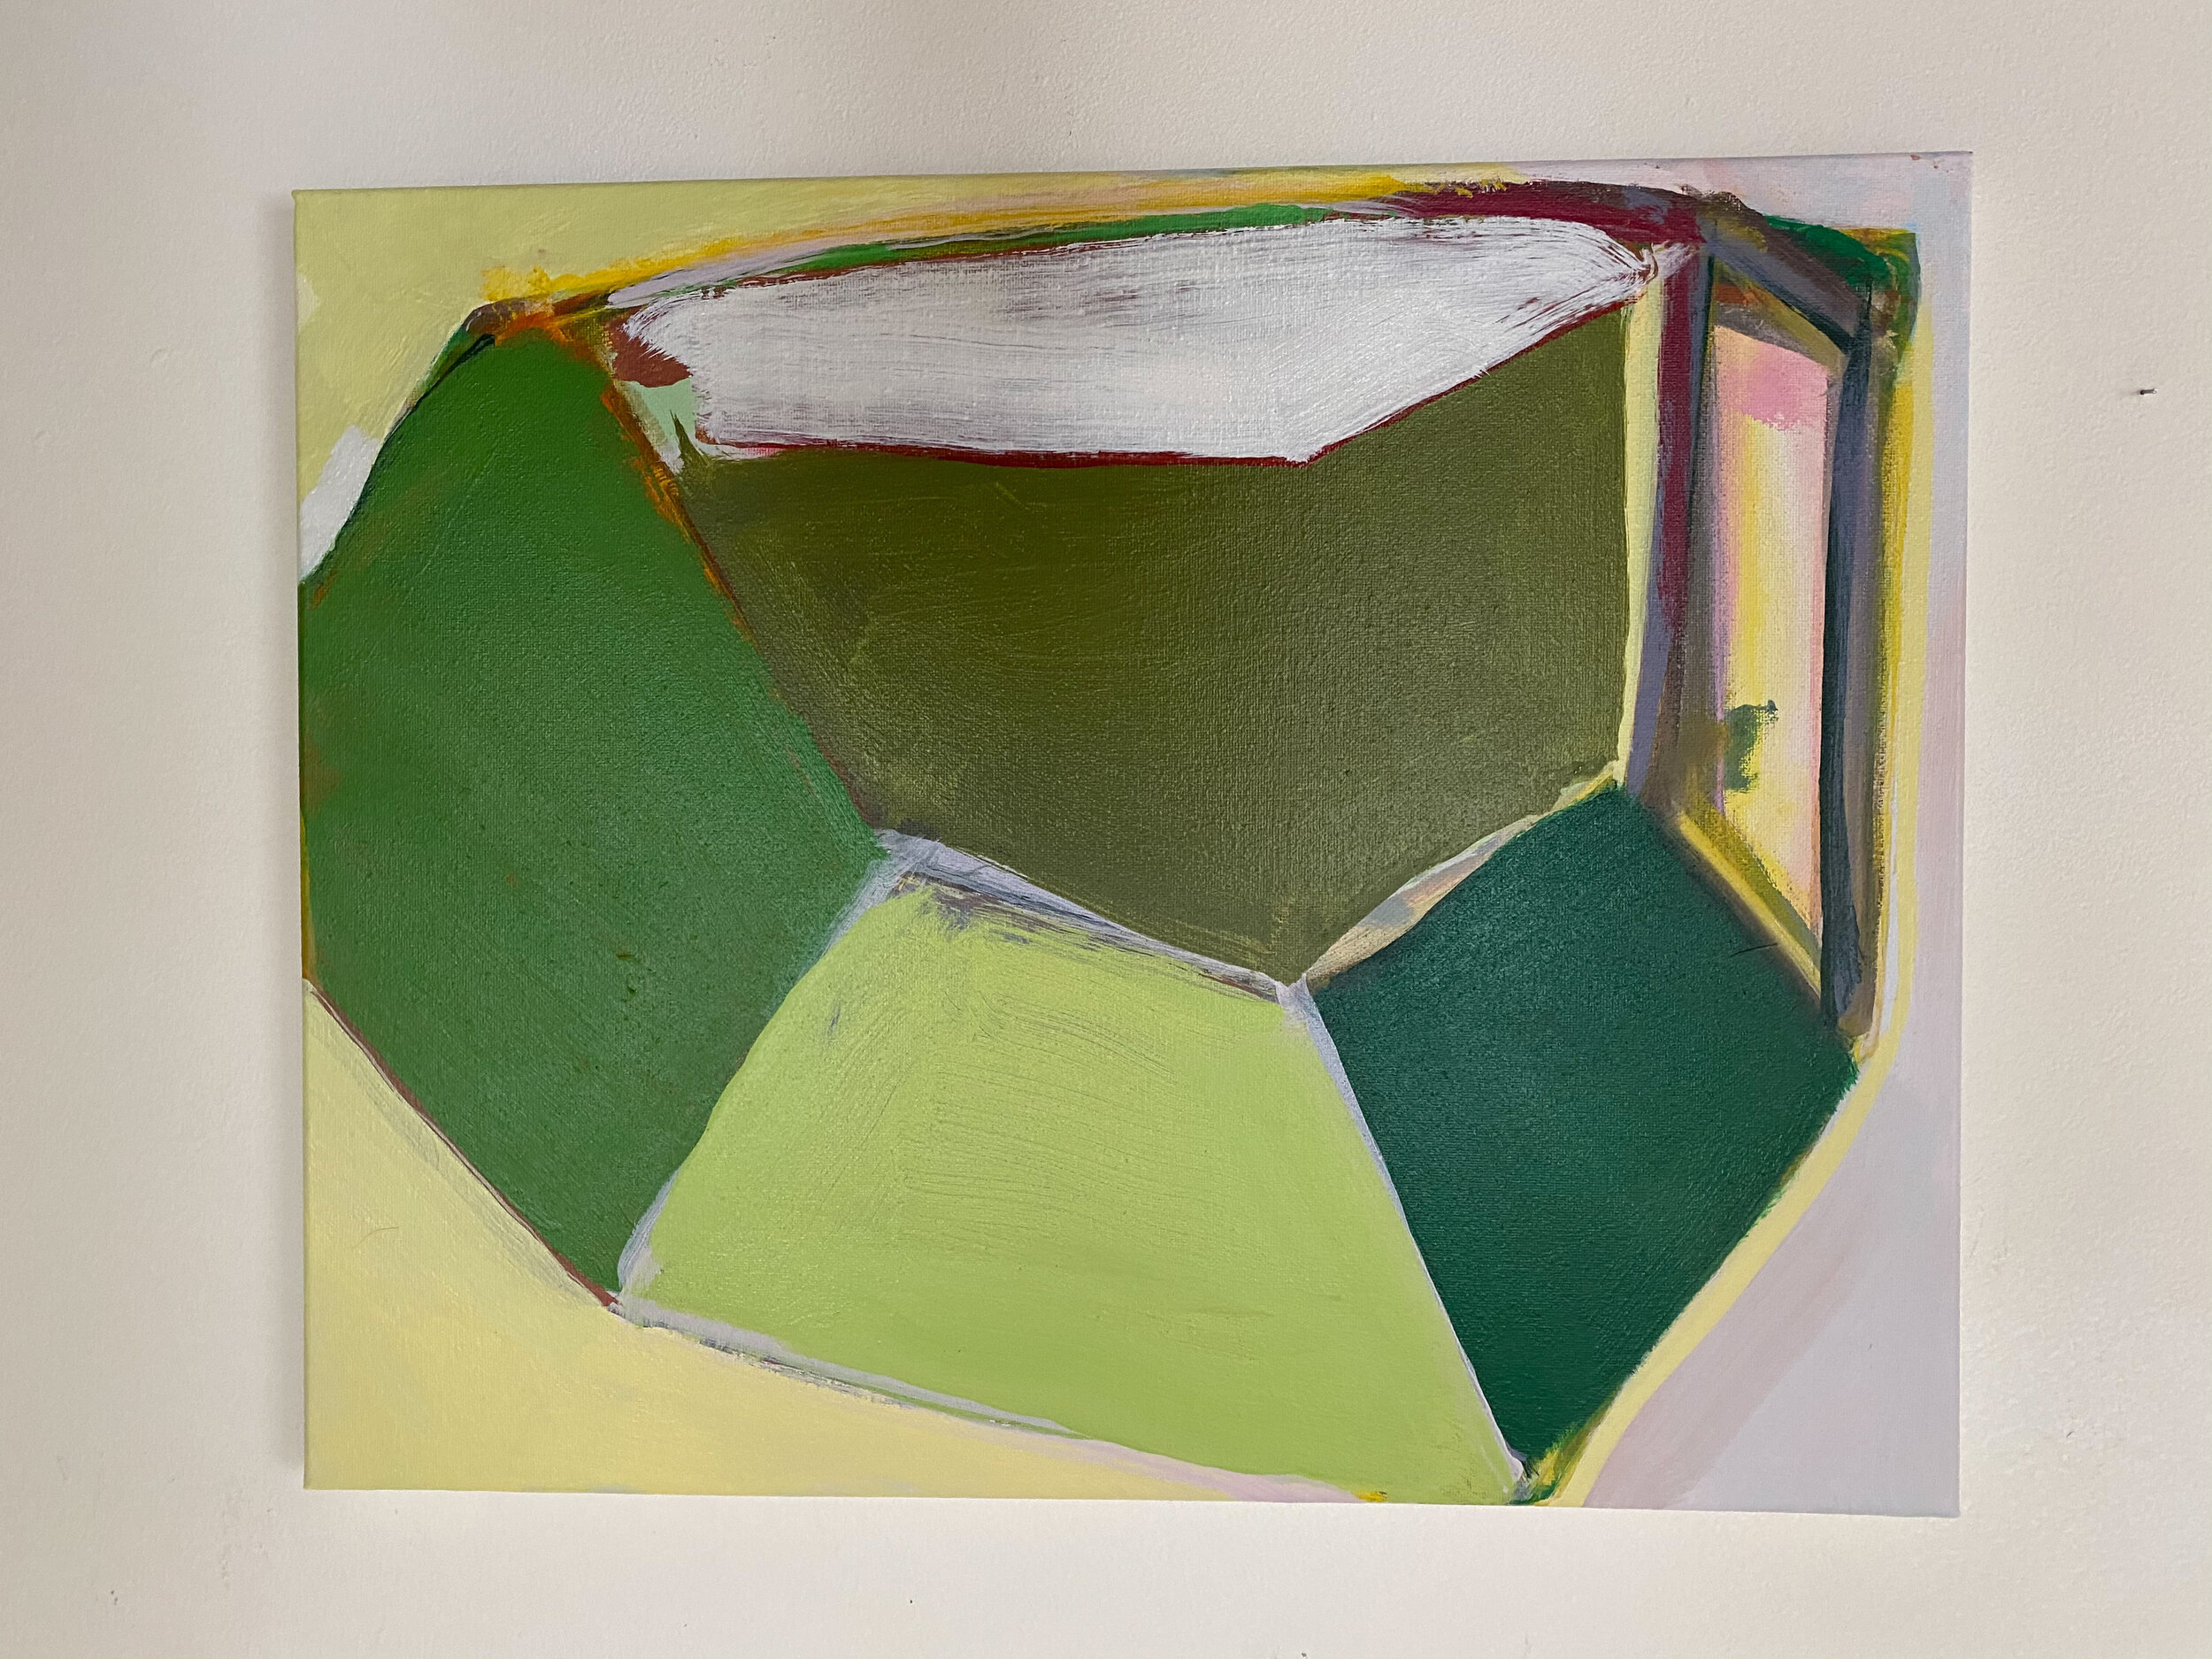 "Slowly Unfolding Form", acrylic on canvas, 16" x 20" (40.6cm x 50.8cm)